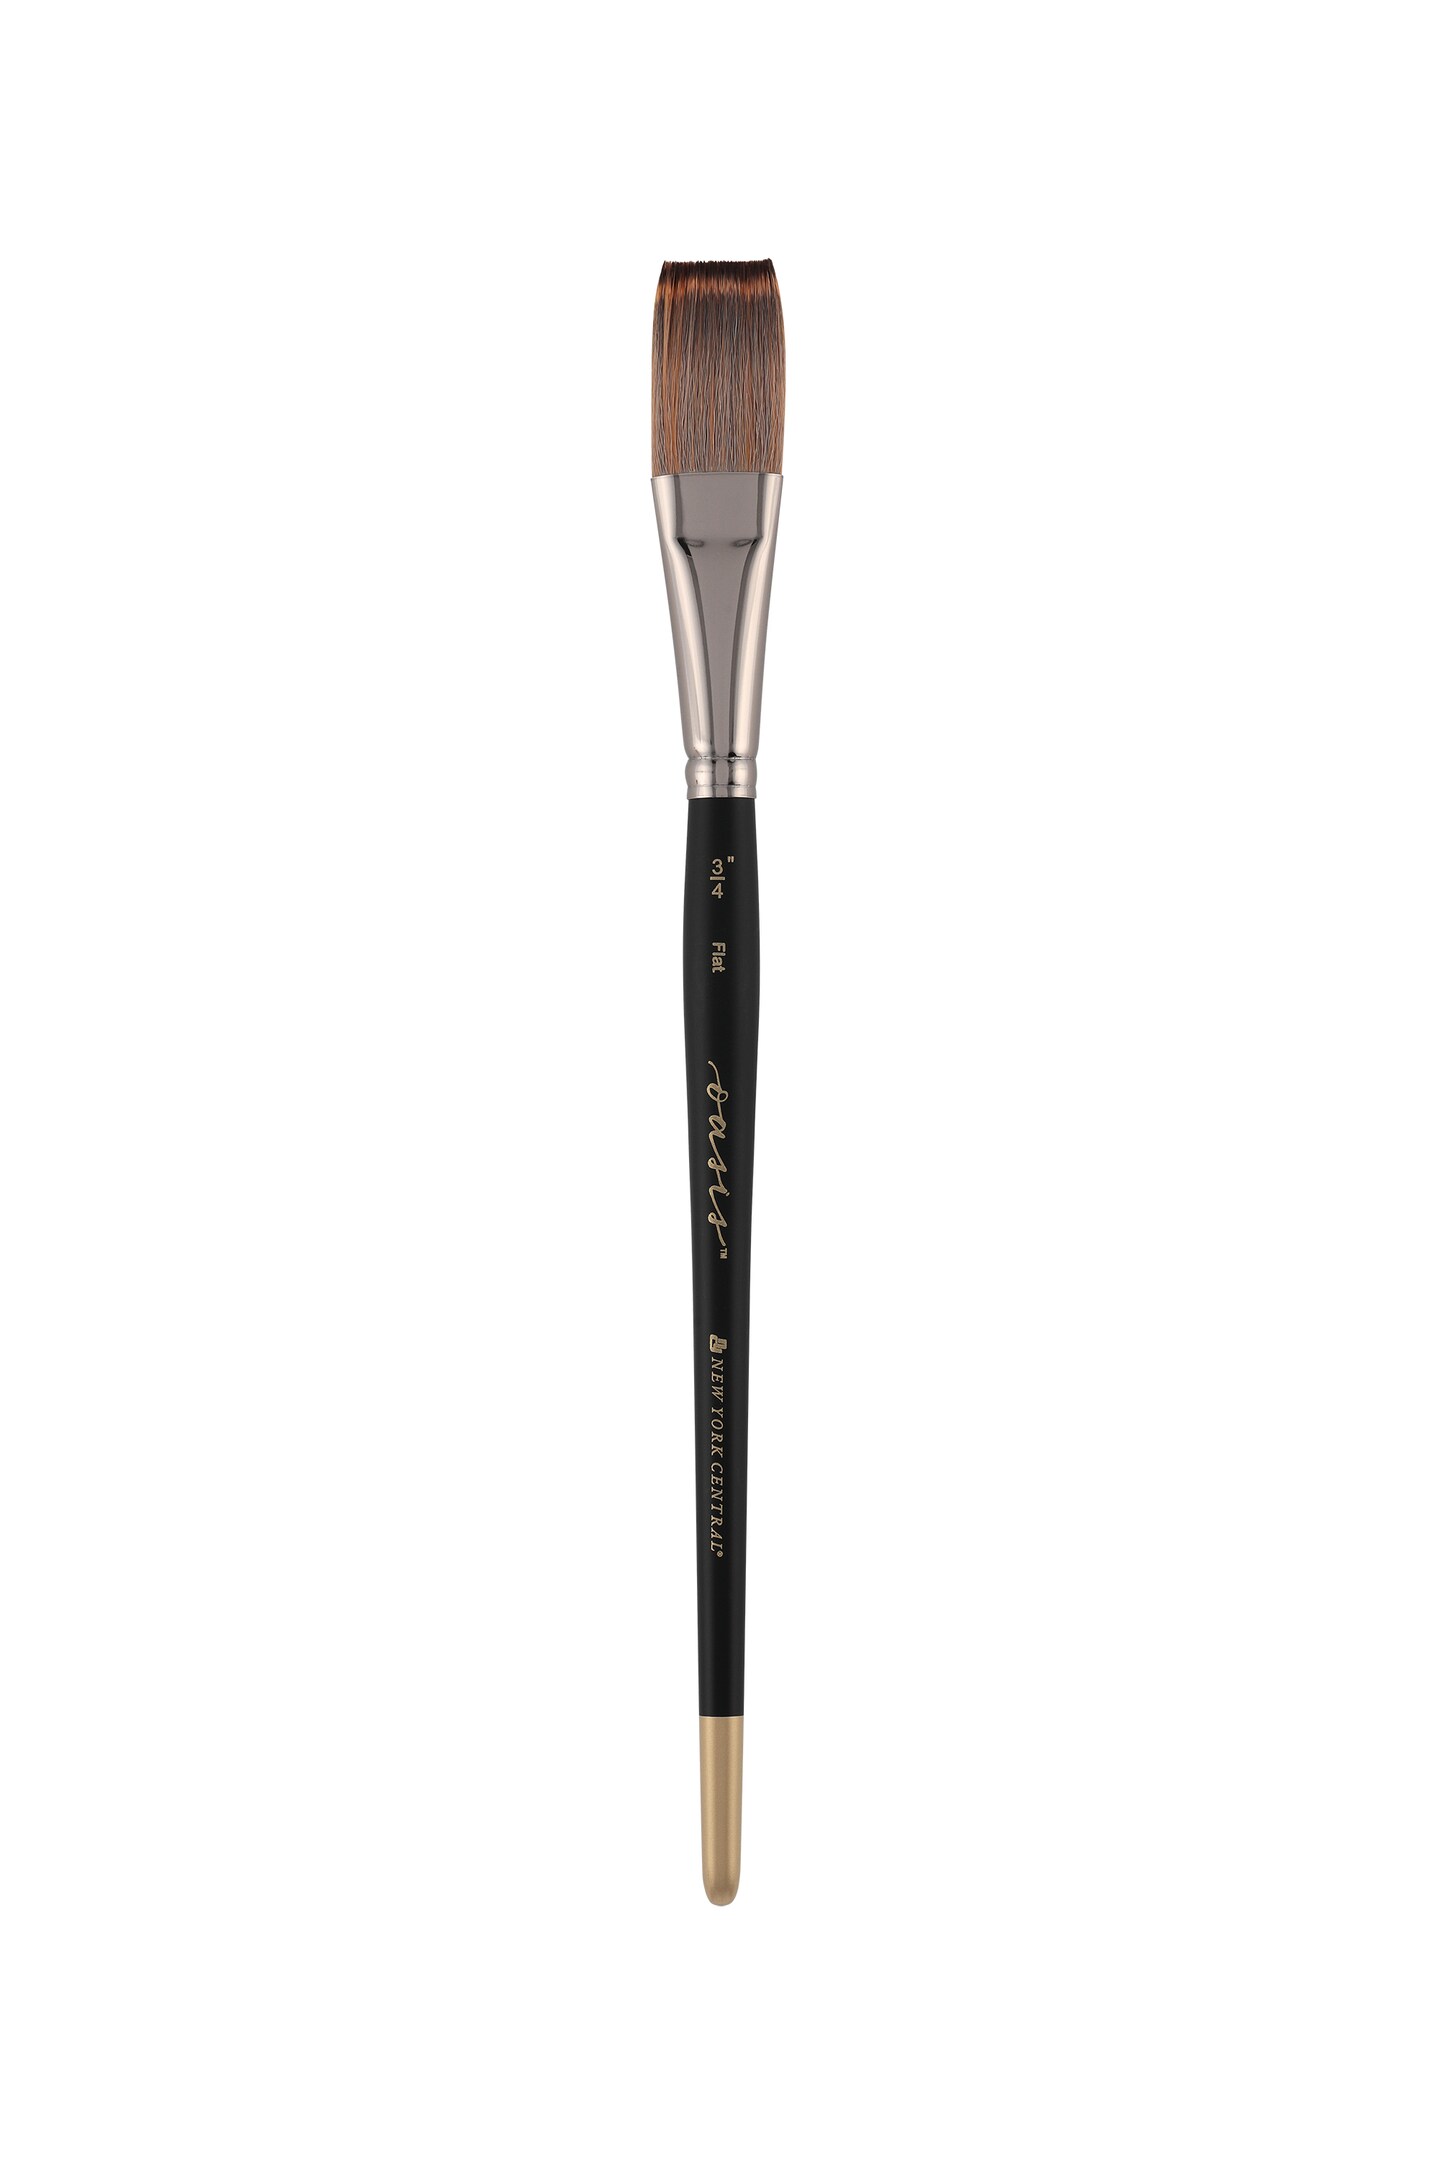 Smooth Blending Brushes Tools Drawing Painting Makeup Brushes Flat Kit Make  up Brushes for Scrapbooking Card